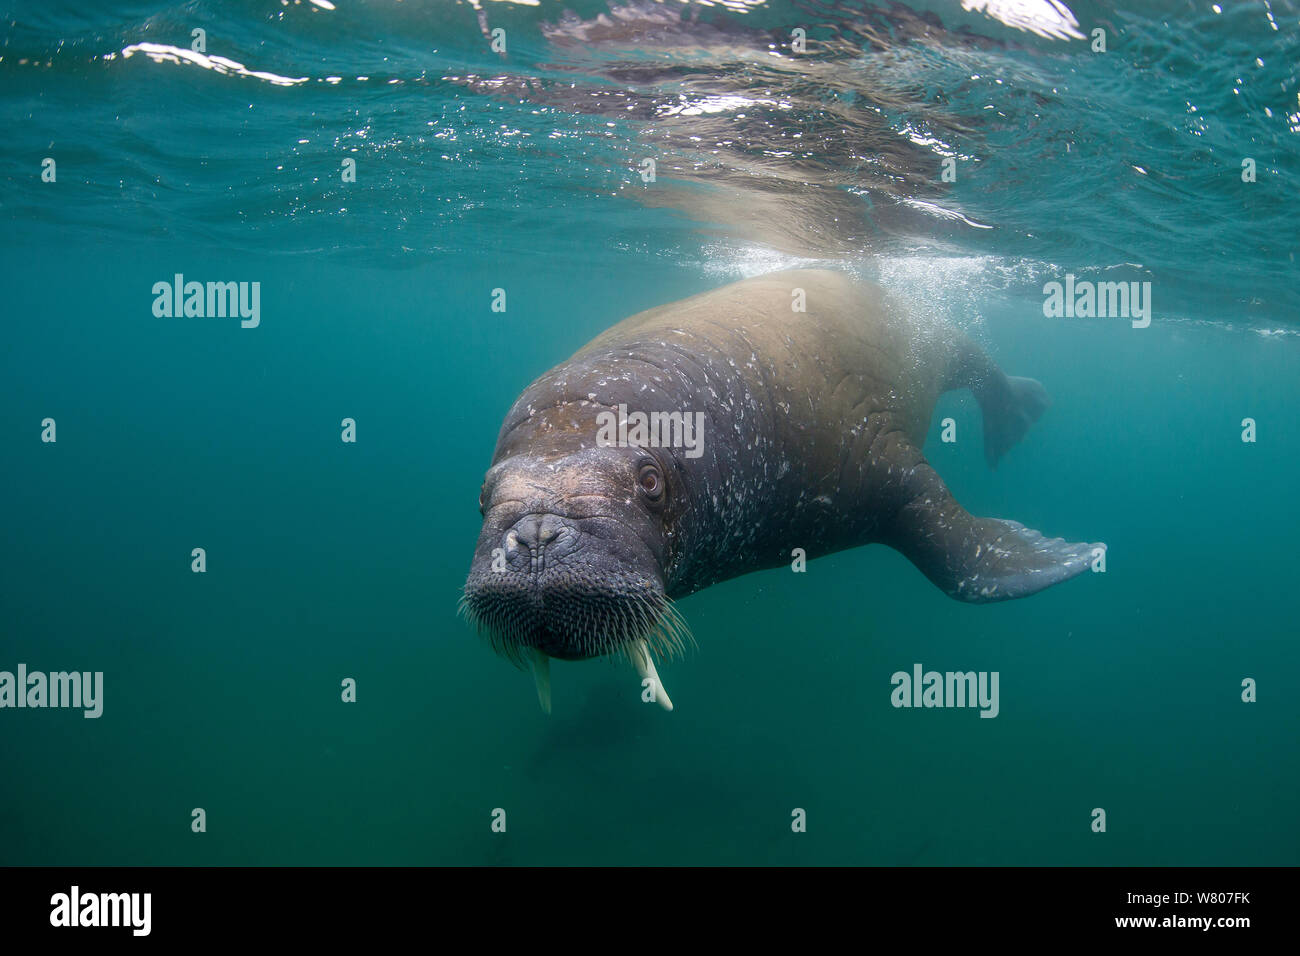 Walrus (Odobenus rosmarus) swimming underwater, Spitsbergen, Svalbard Archipelago, Norway, Arctic Ocean. July. Stock Photo